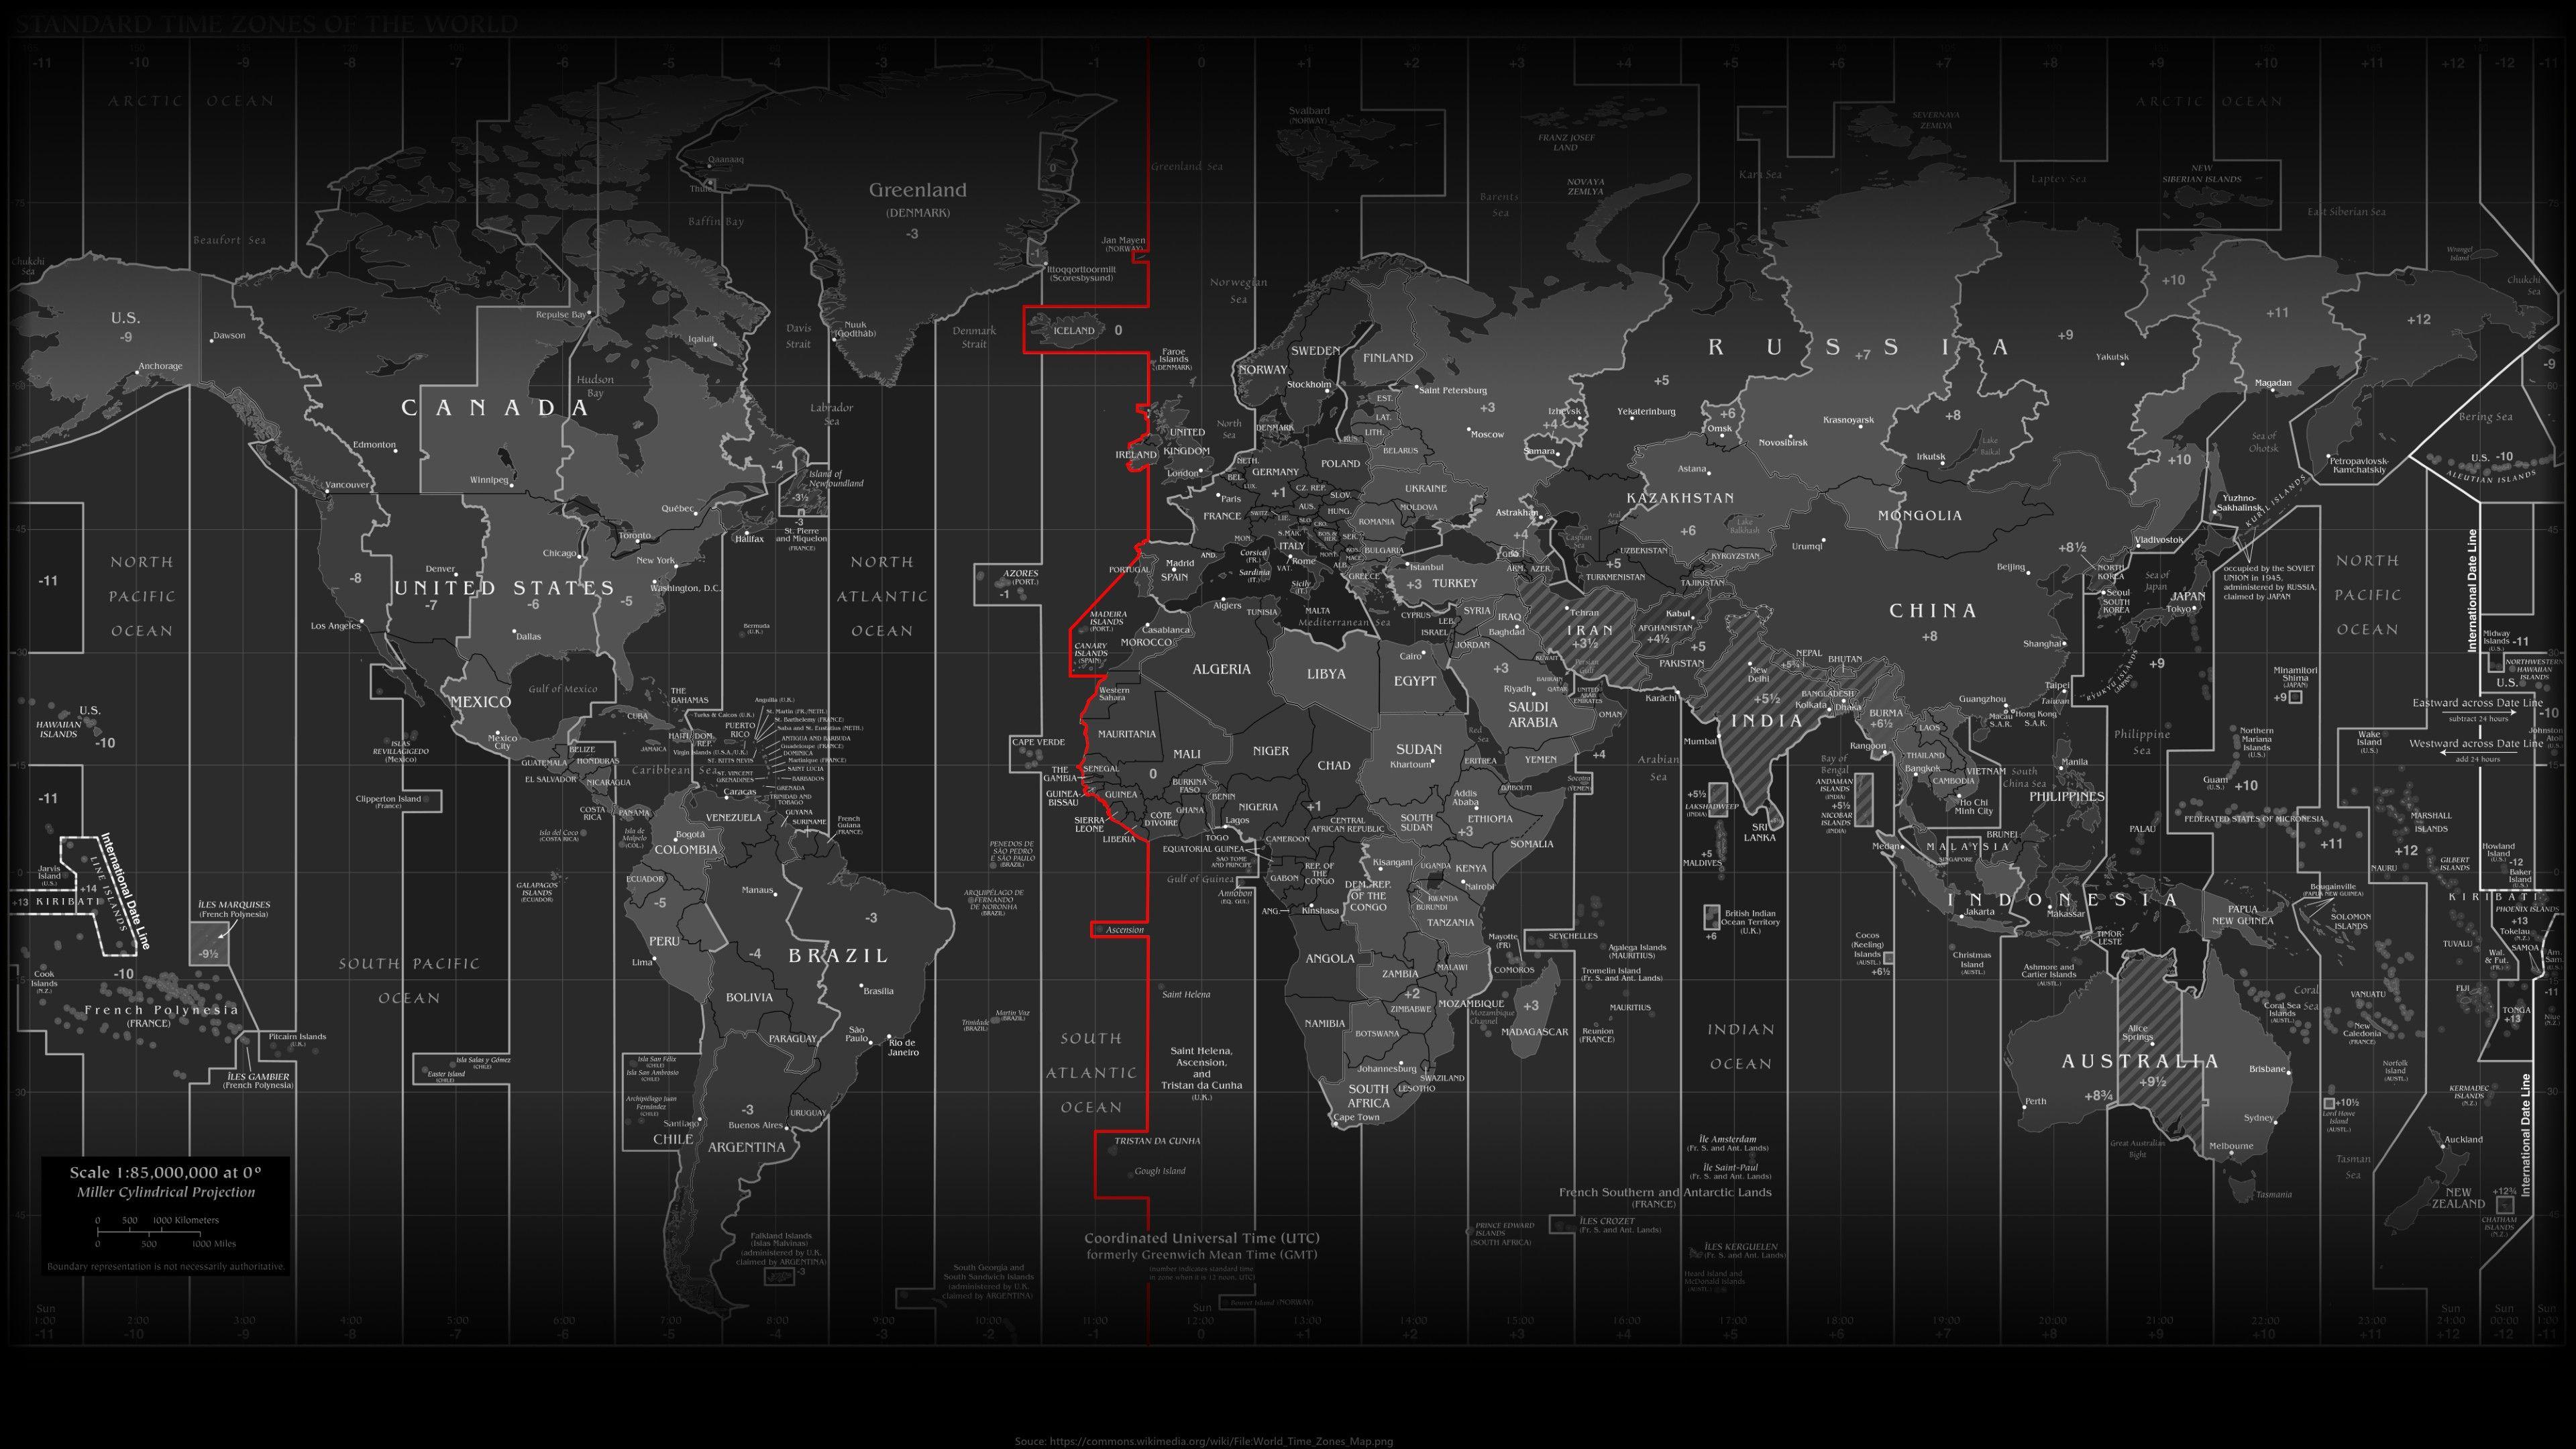 Black And White World Map Wallpaper